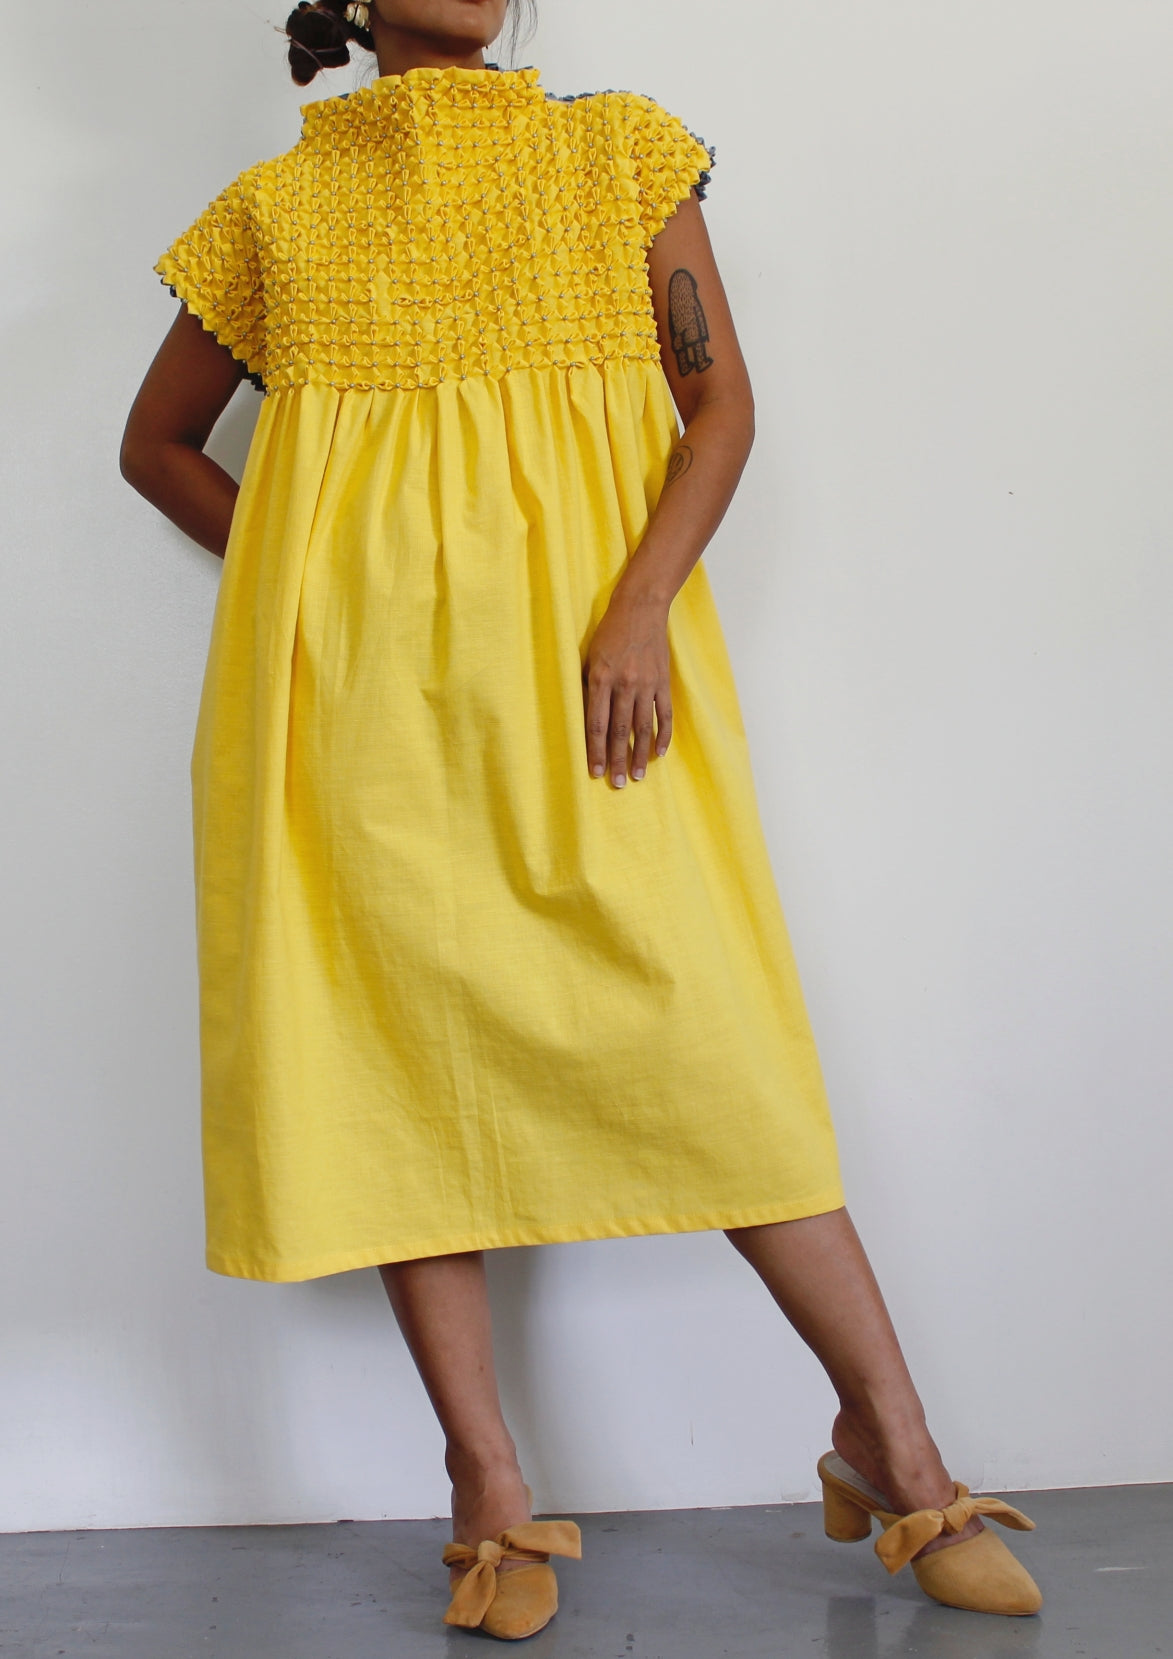 bloom dress - yellow & gray